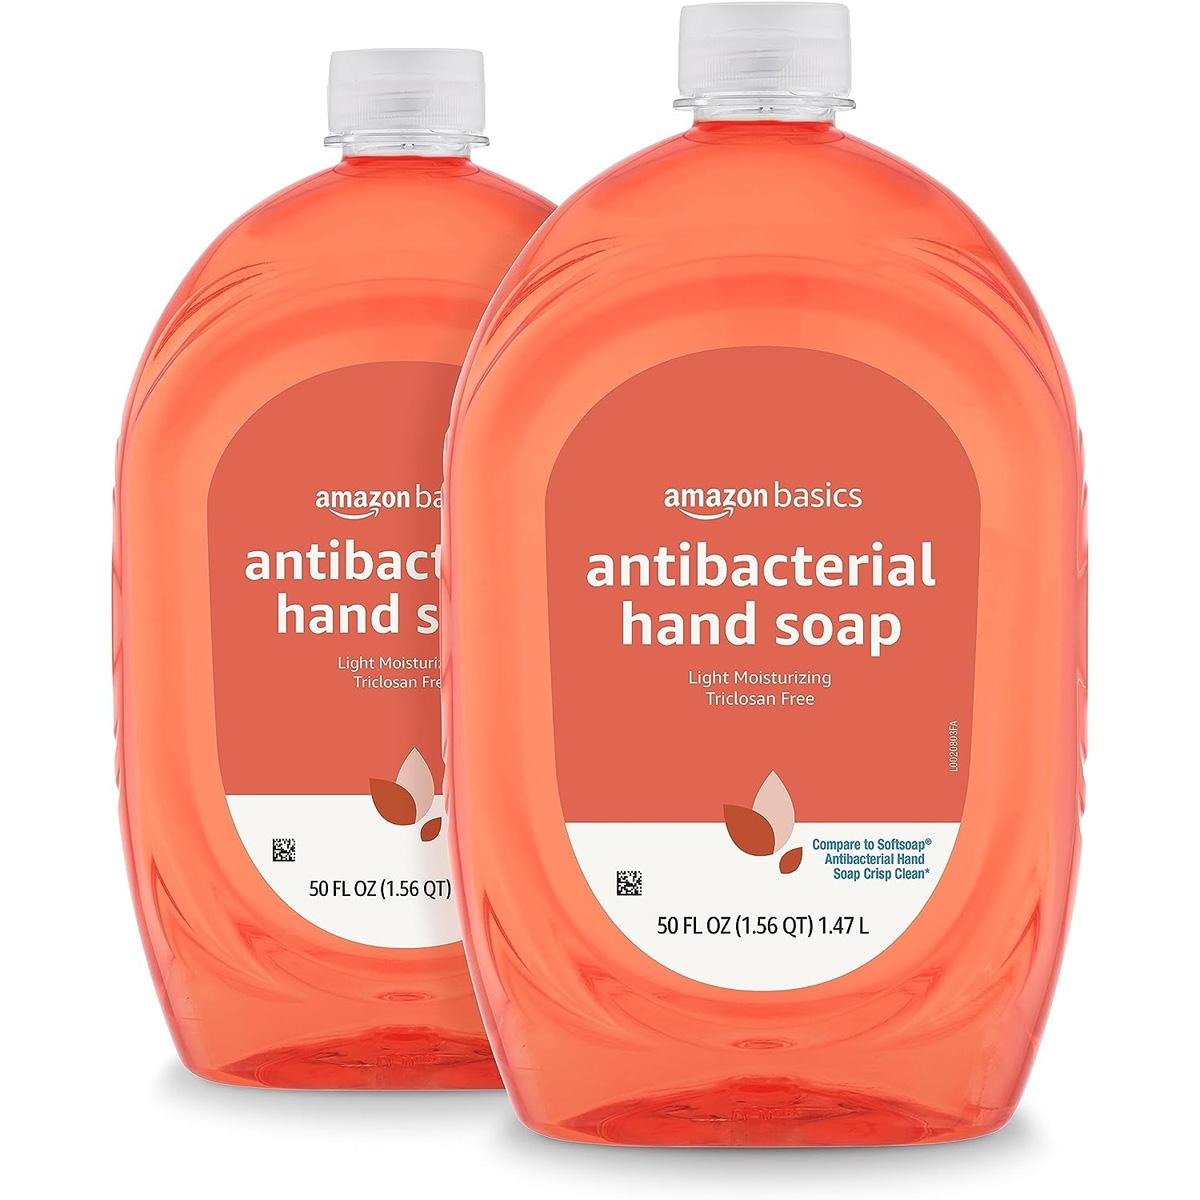 Amazon Basics Antibacterial Liquid Hand Soap Refills 2 Pack for $6.37